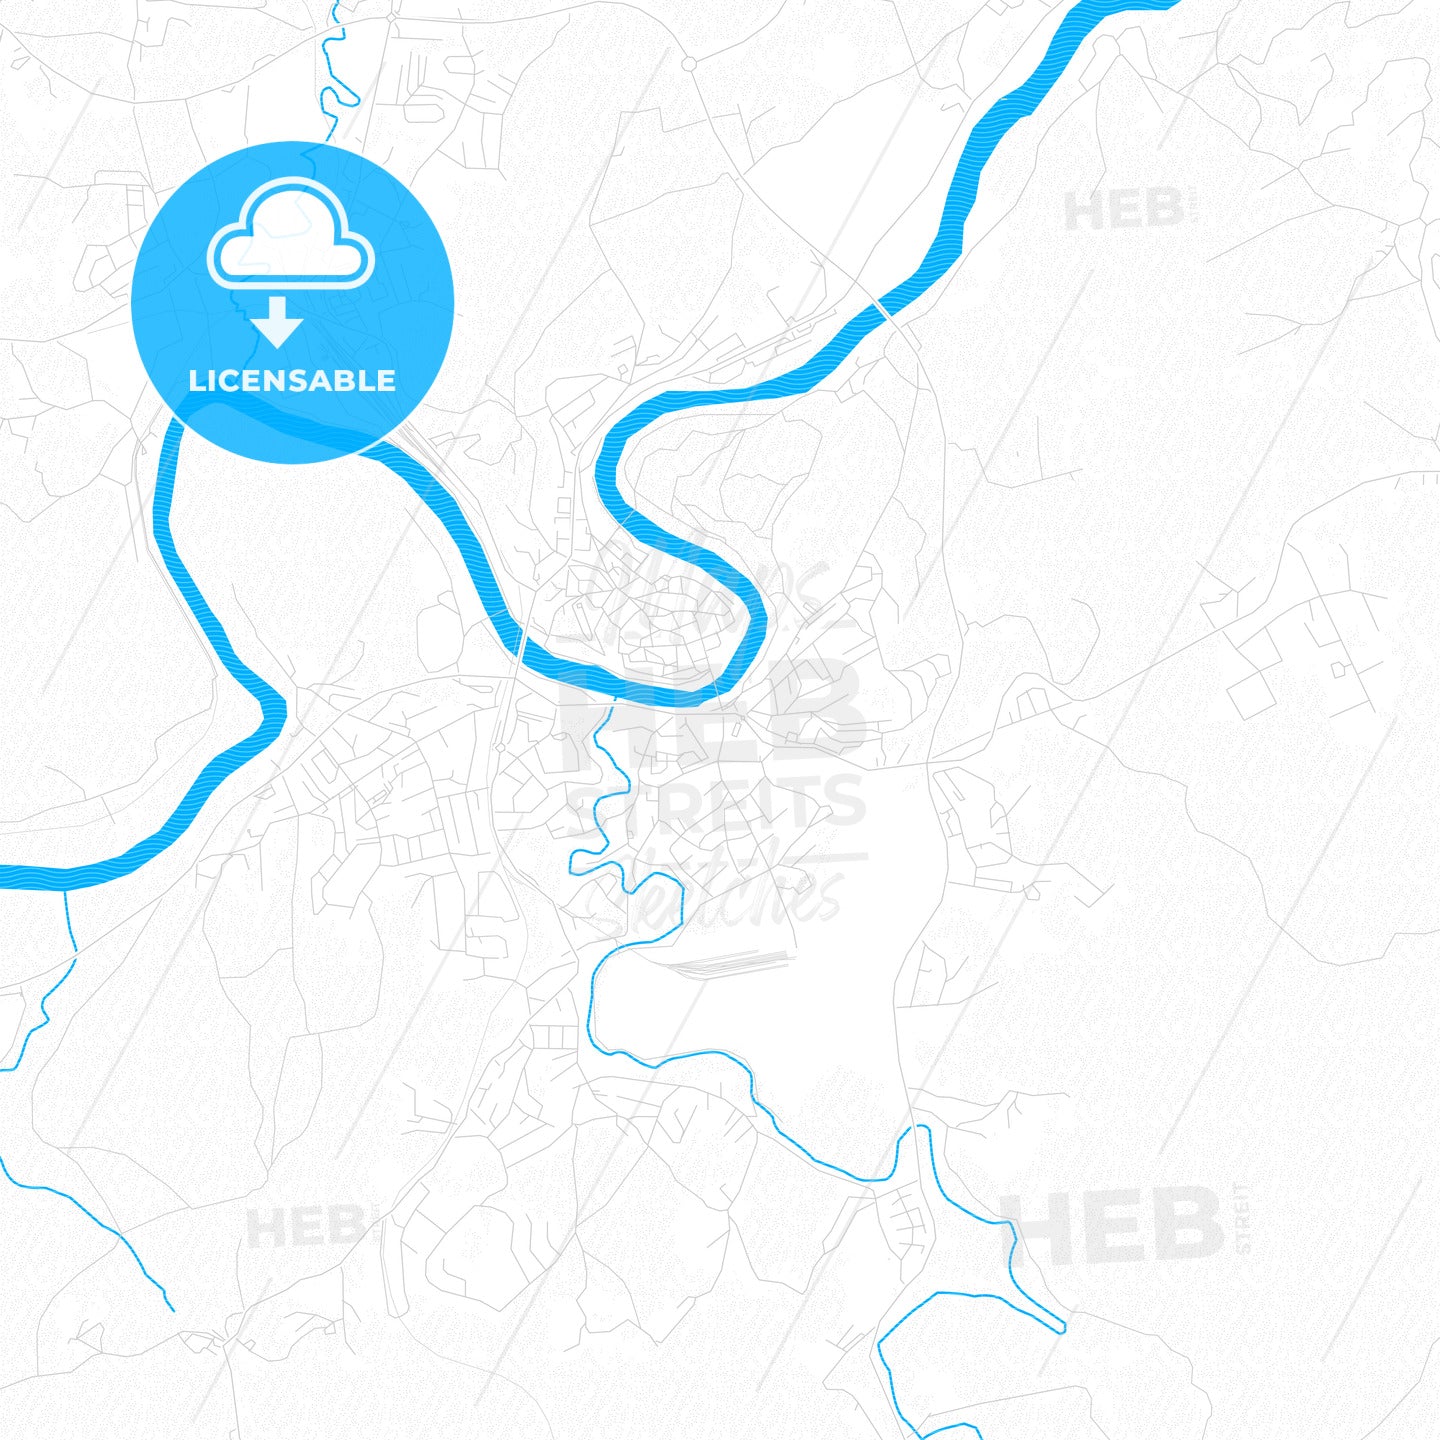 Novo Mesto, Slovenia PDF vector map with water in focus